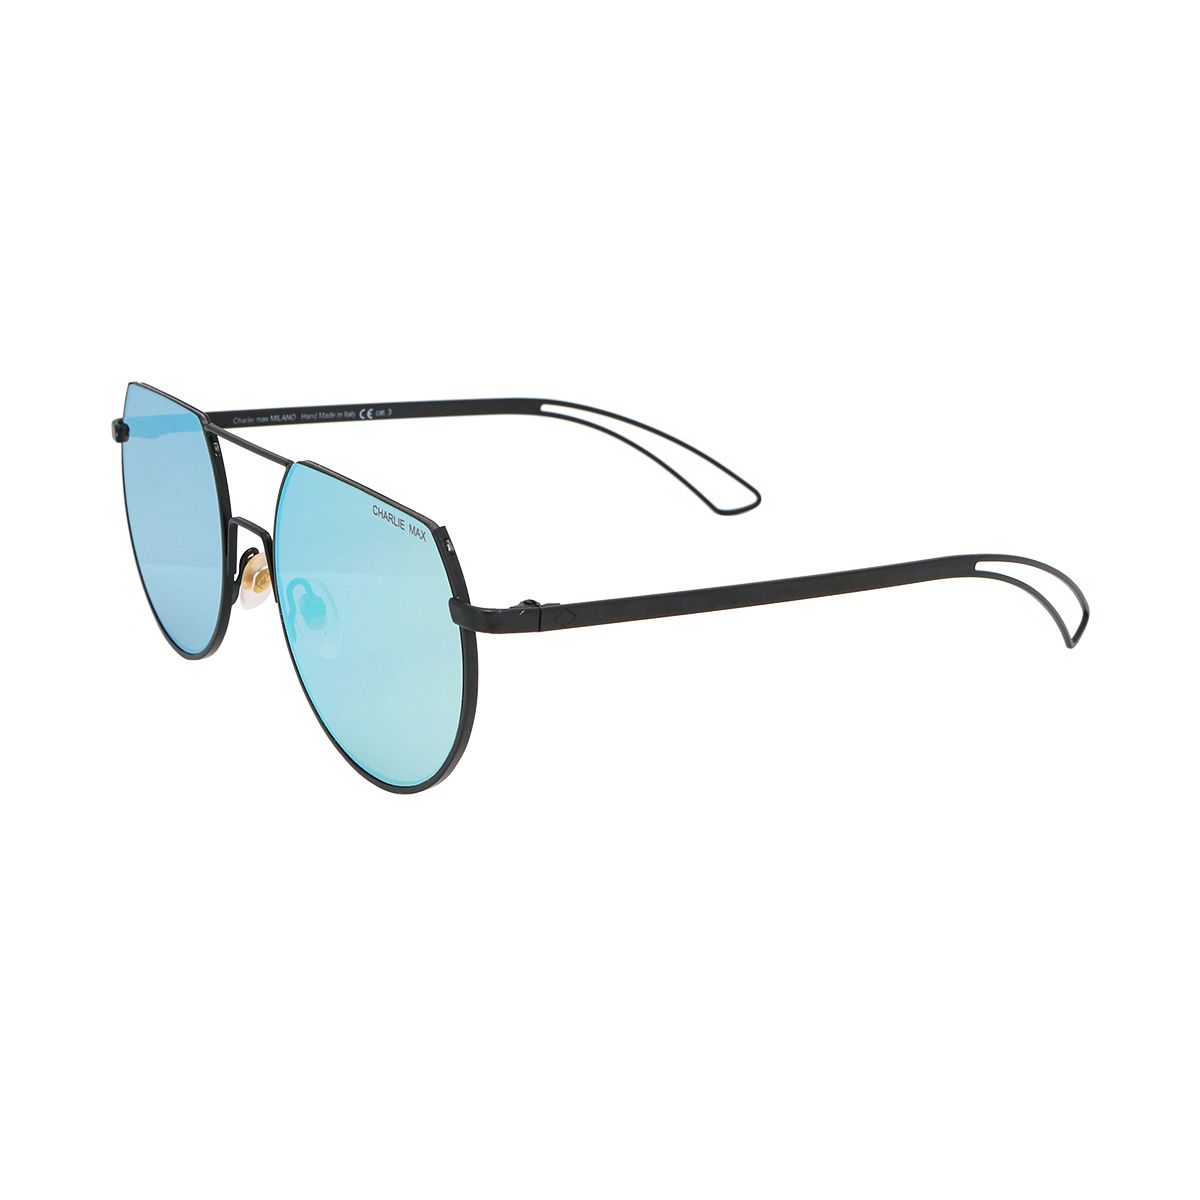 PONTACCIO Round Sunglasses BL-B23 - size 55